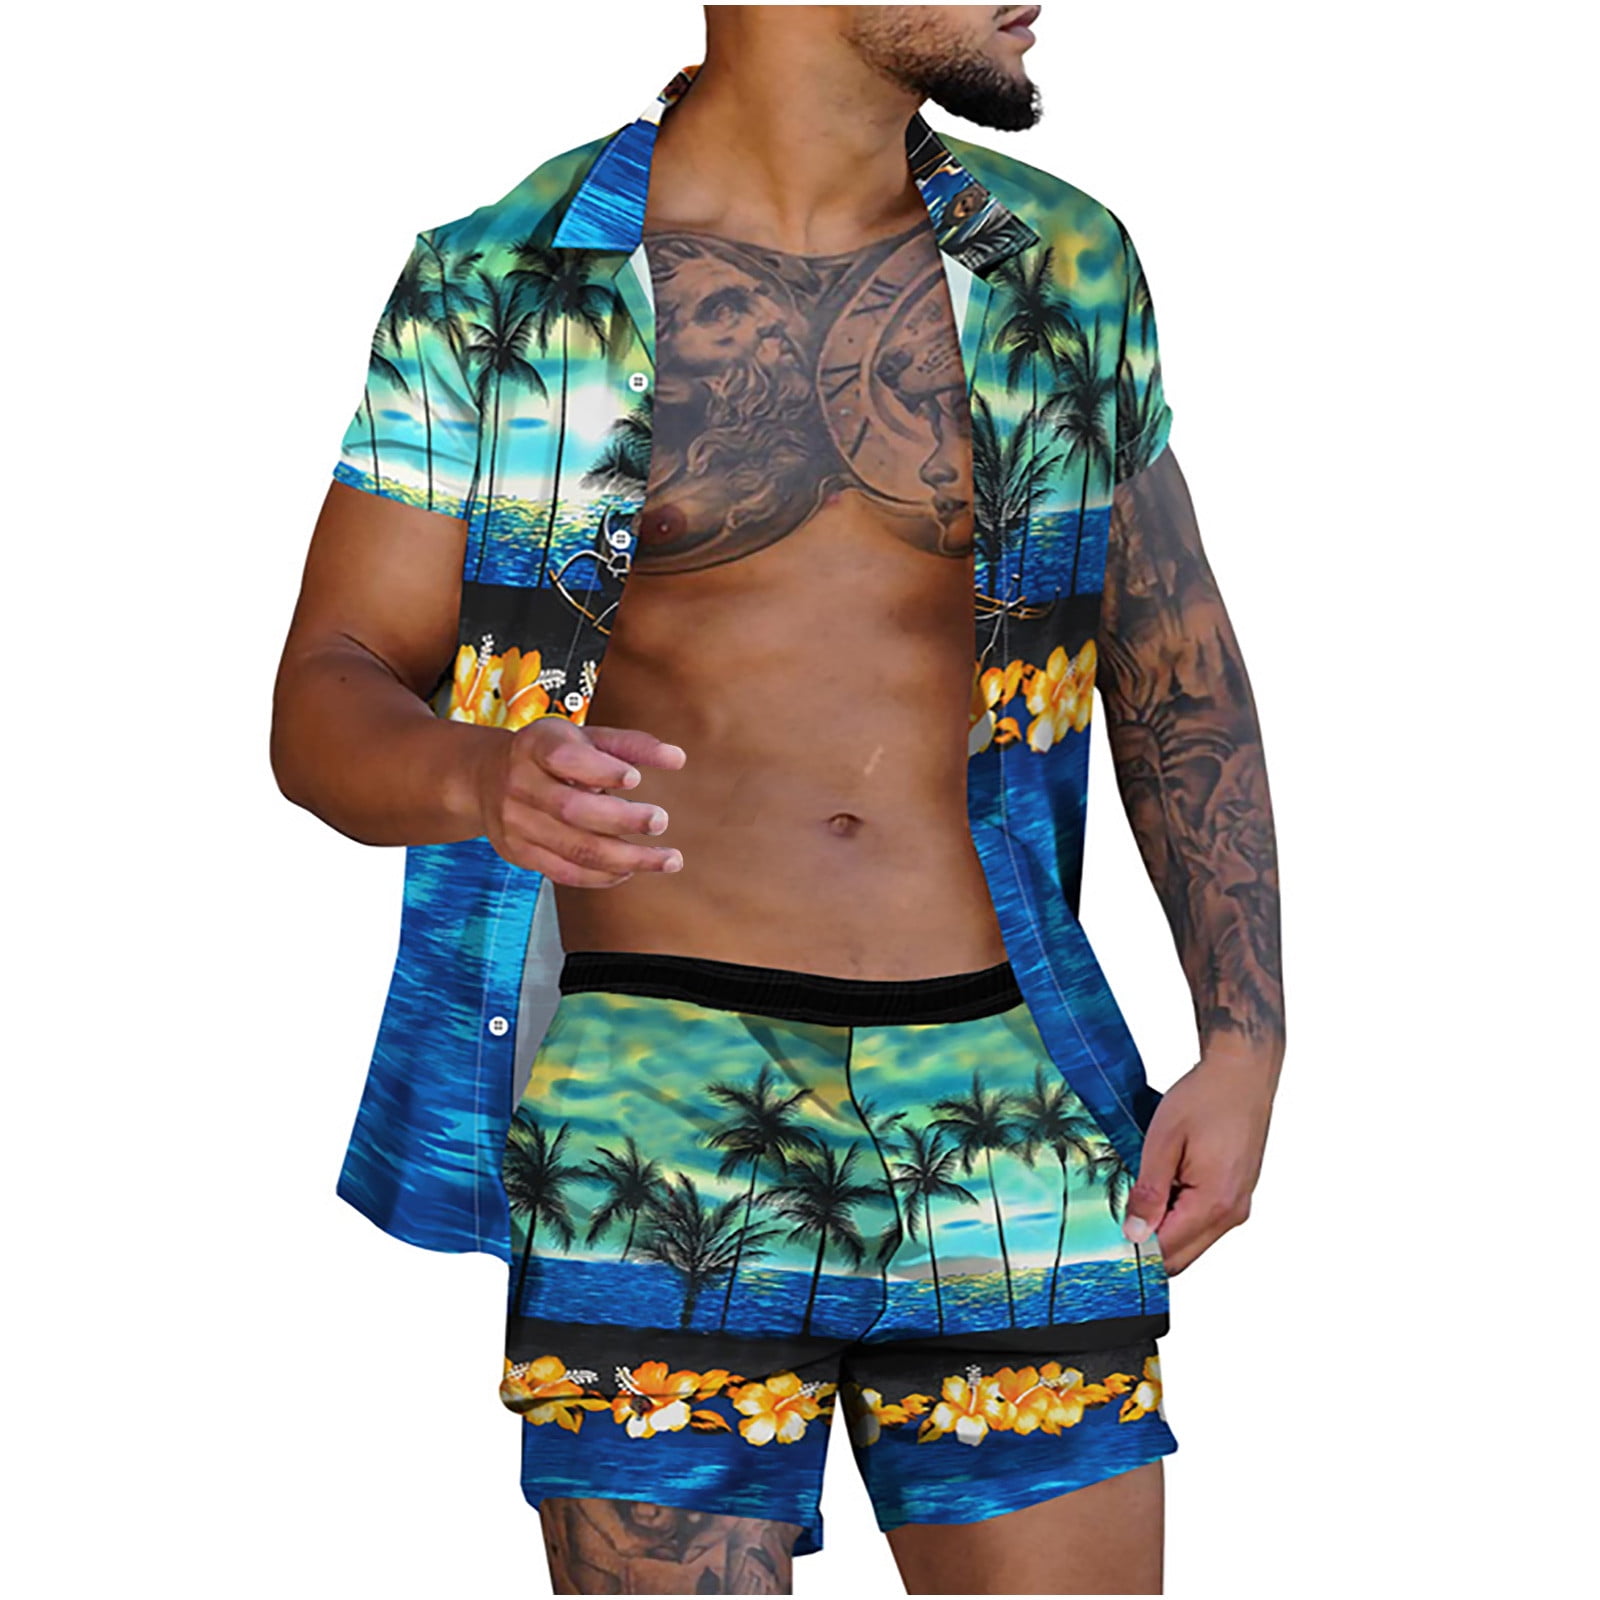 Zcfzjw Men's Hawaiian Shirts Set Casual Button Down Short Sleeve Sunset Palm Tree Printed Shorts Summer Beach Tropical Flower Shirt Suits Green Xxxl